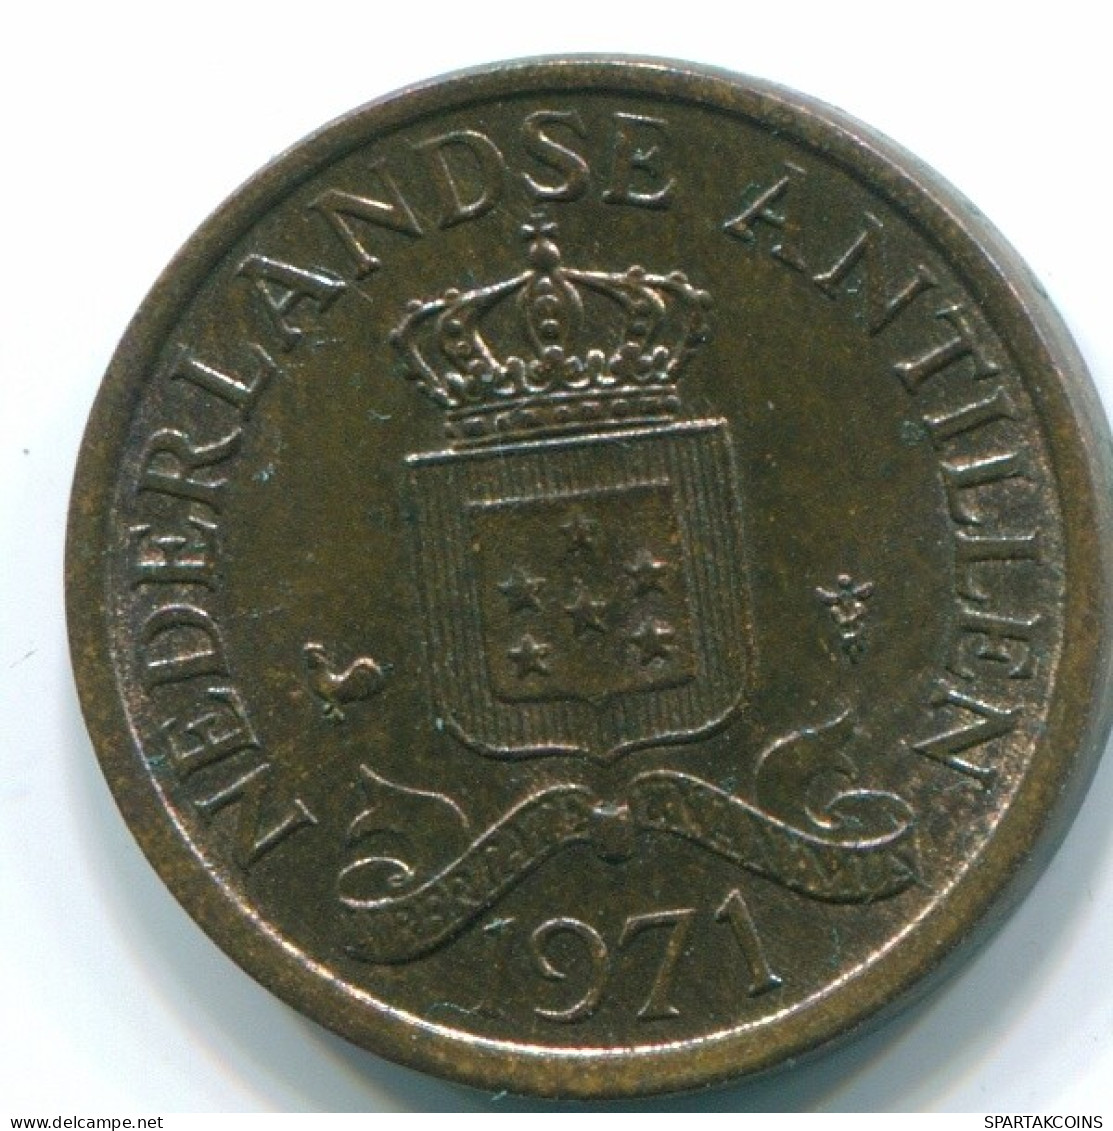 1 CENT 1971 NIEDERLÄNDISCHE ANTILLEN Bronze Koloniale Münze #S10615.D.A - Netherlands Antilles